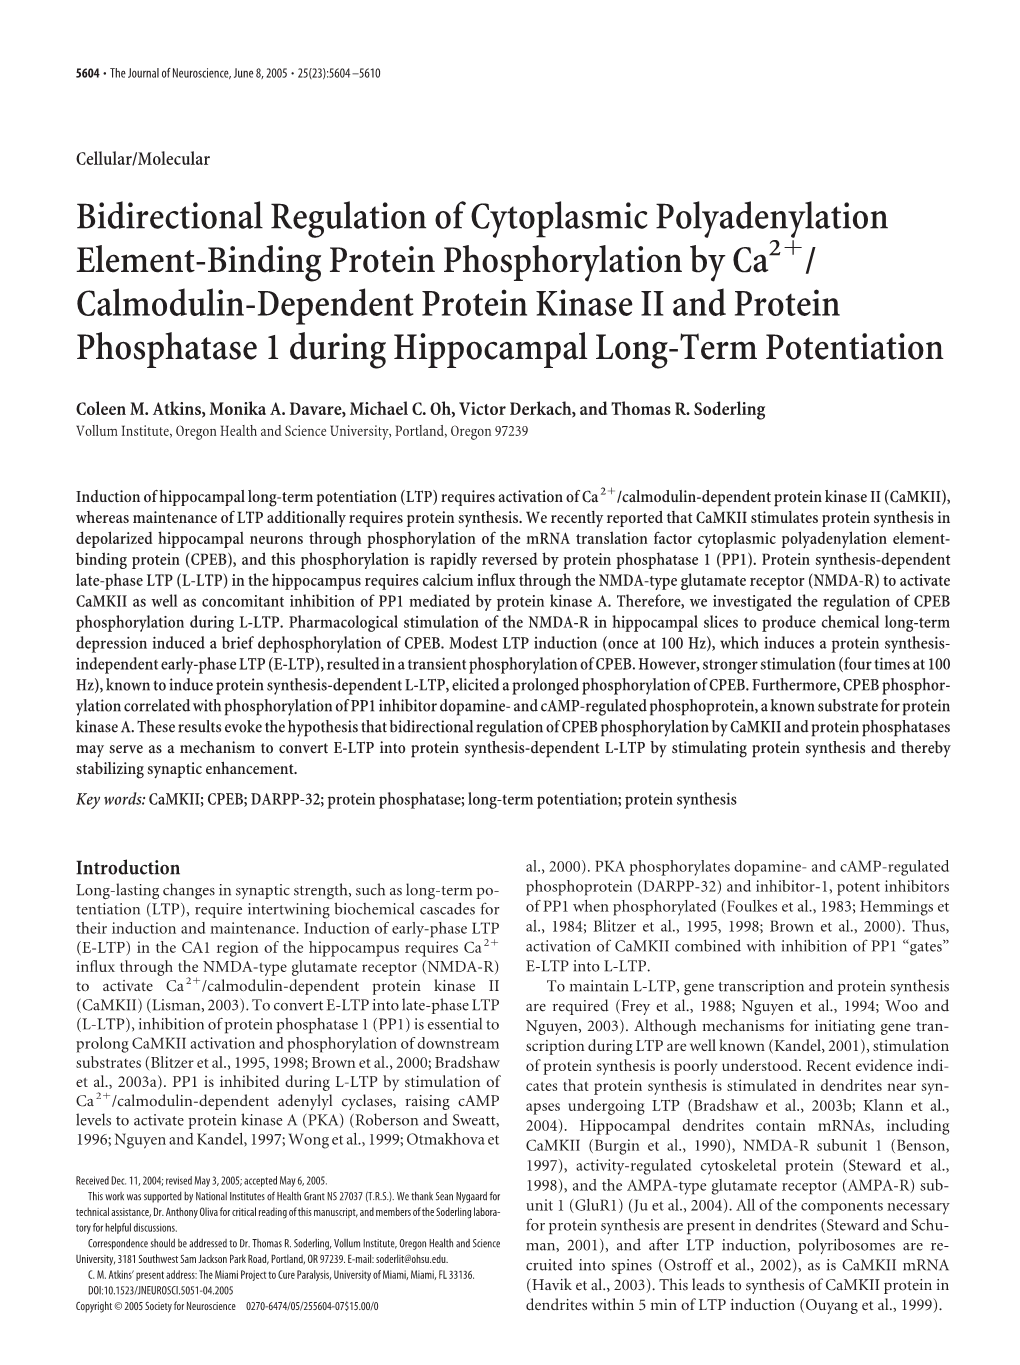 Bidirectional Regulation of Cytoplasmic Polyadenylation